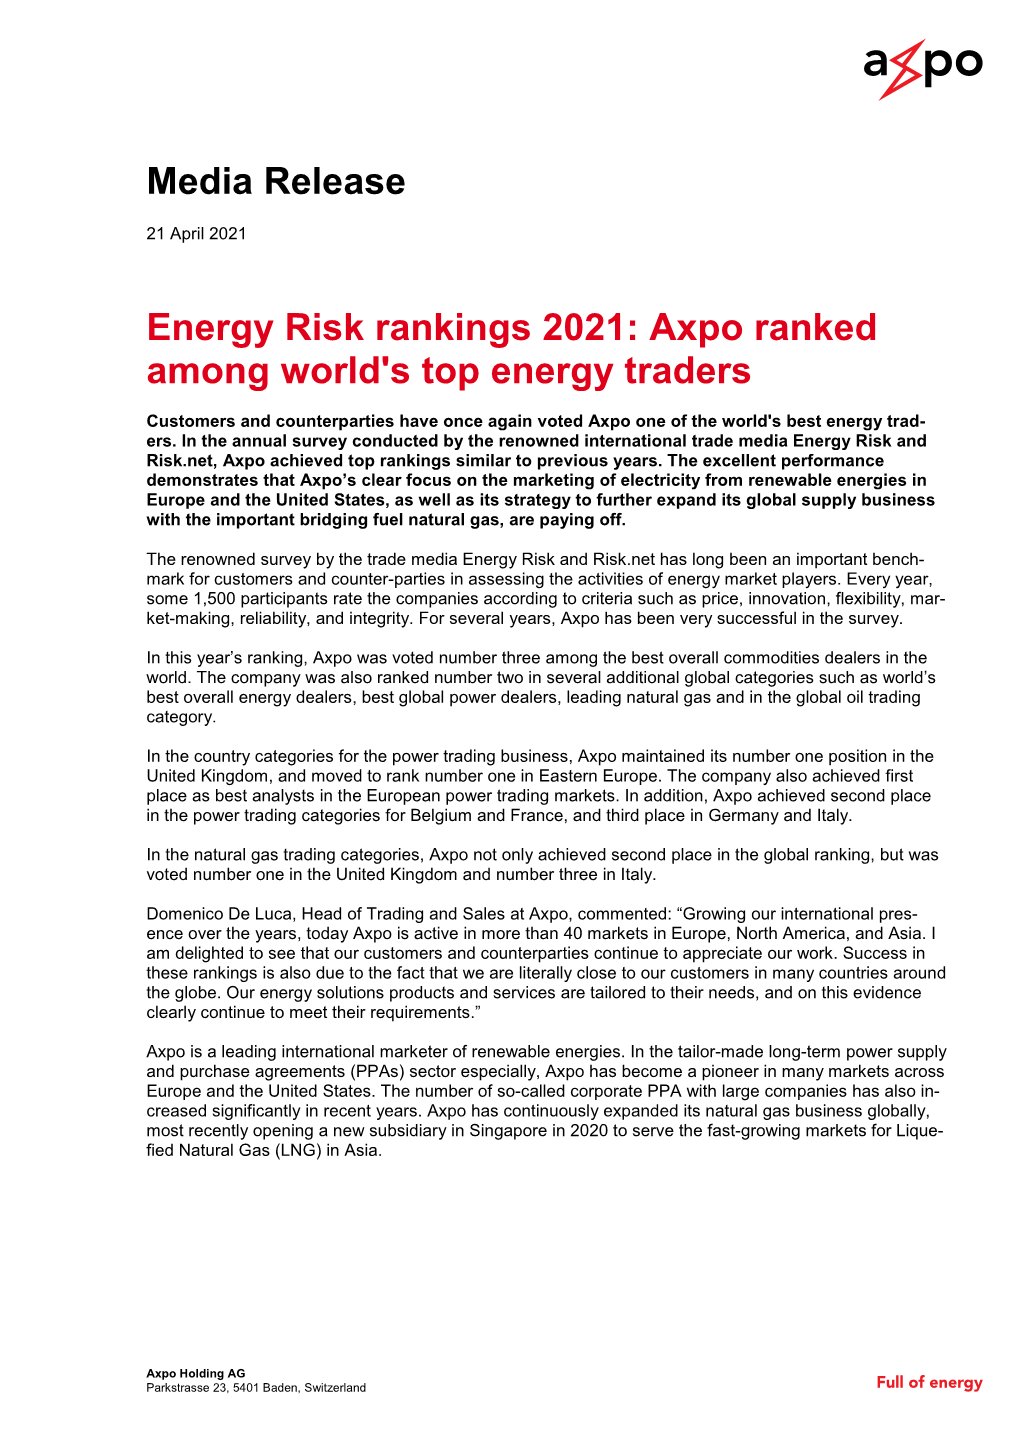 Media Release Energy Risk Rankings 2021: Axpo Ranked Among World's